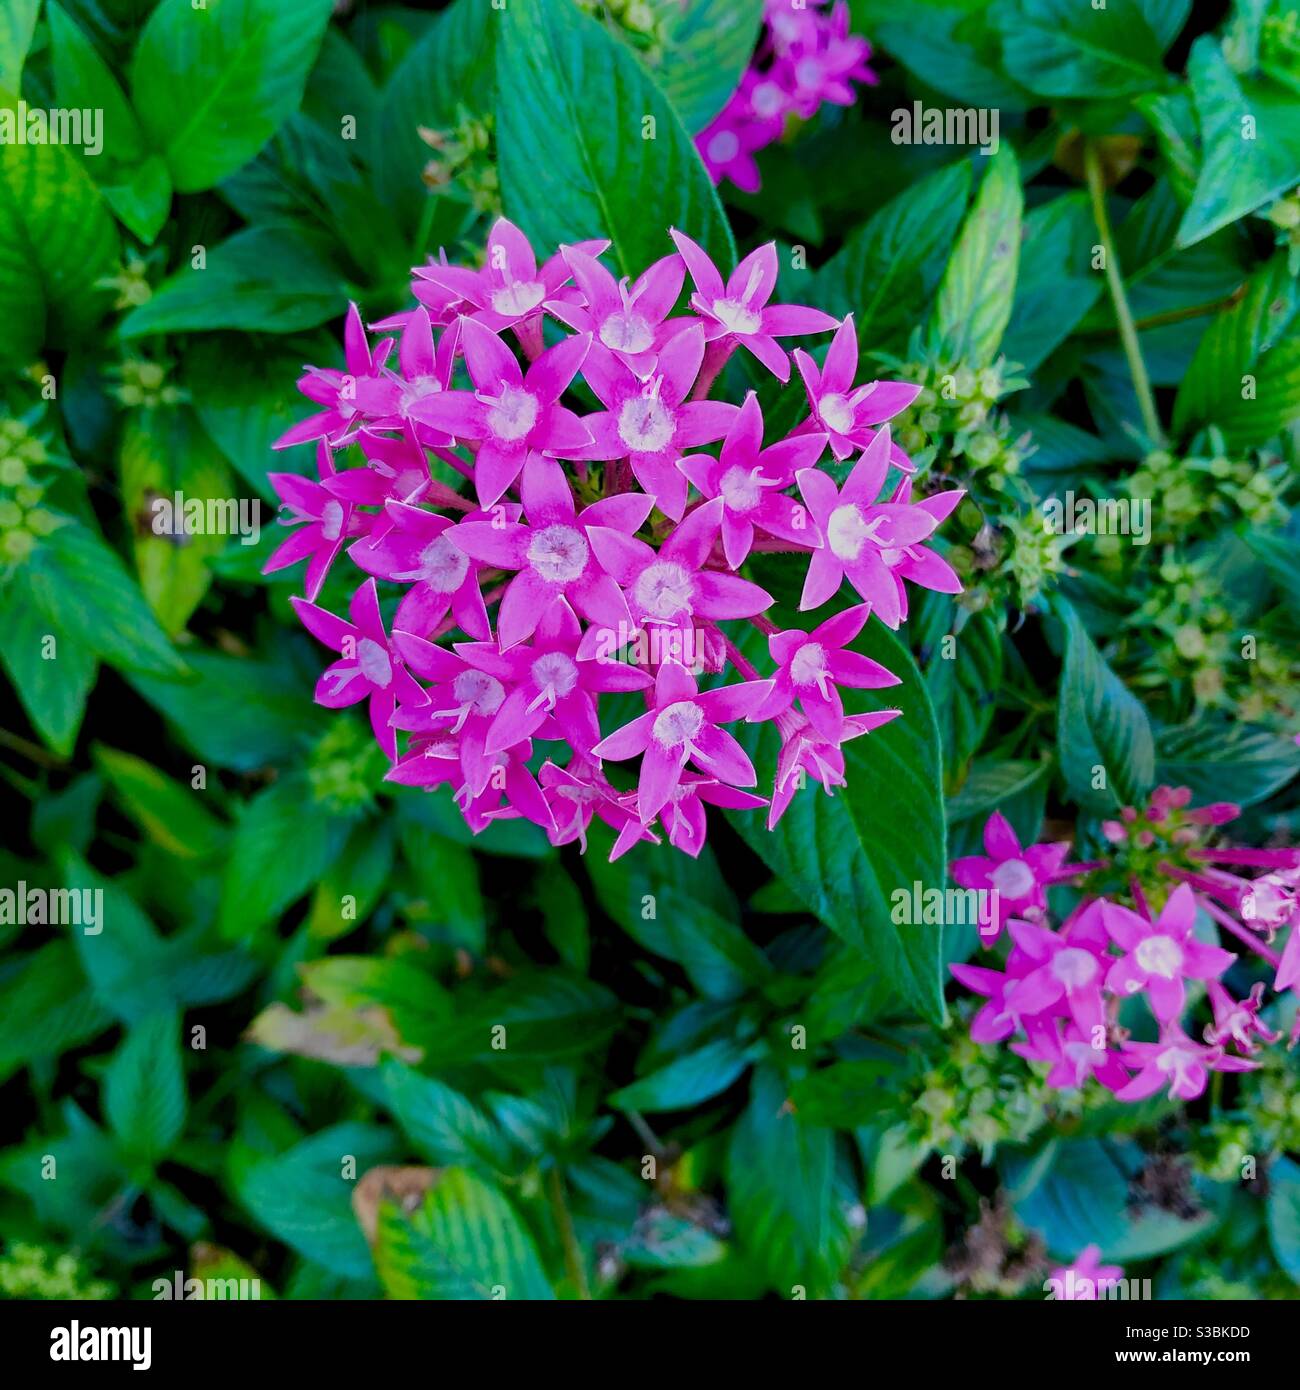 Ixora -Flowering tropical shrub from the family Rubiaceae. Stock Photo